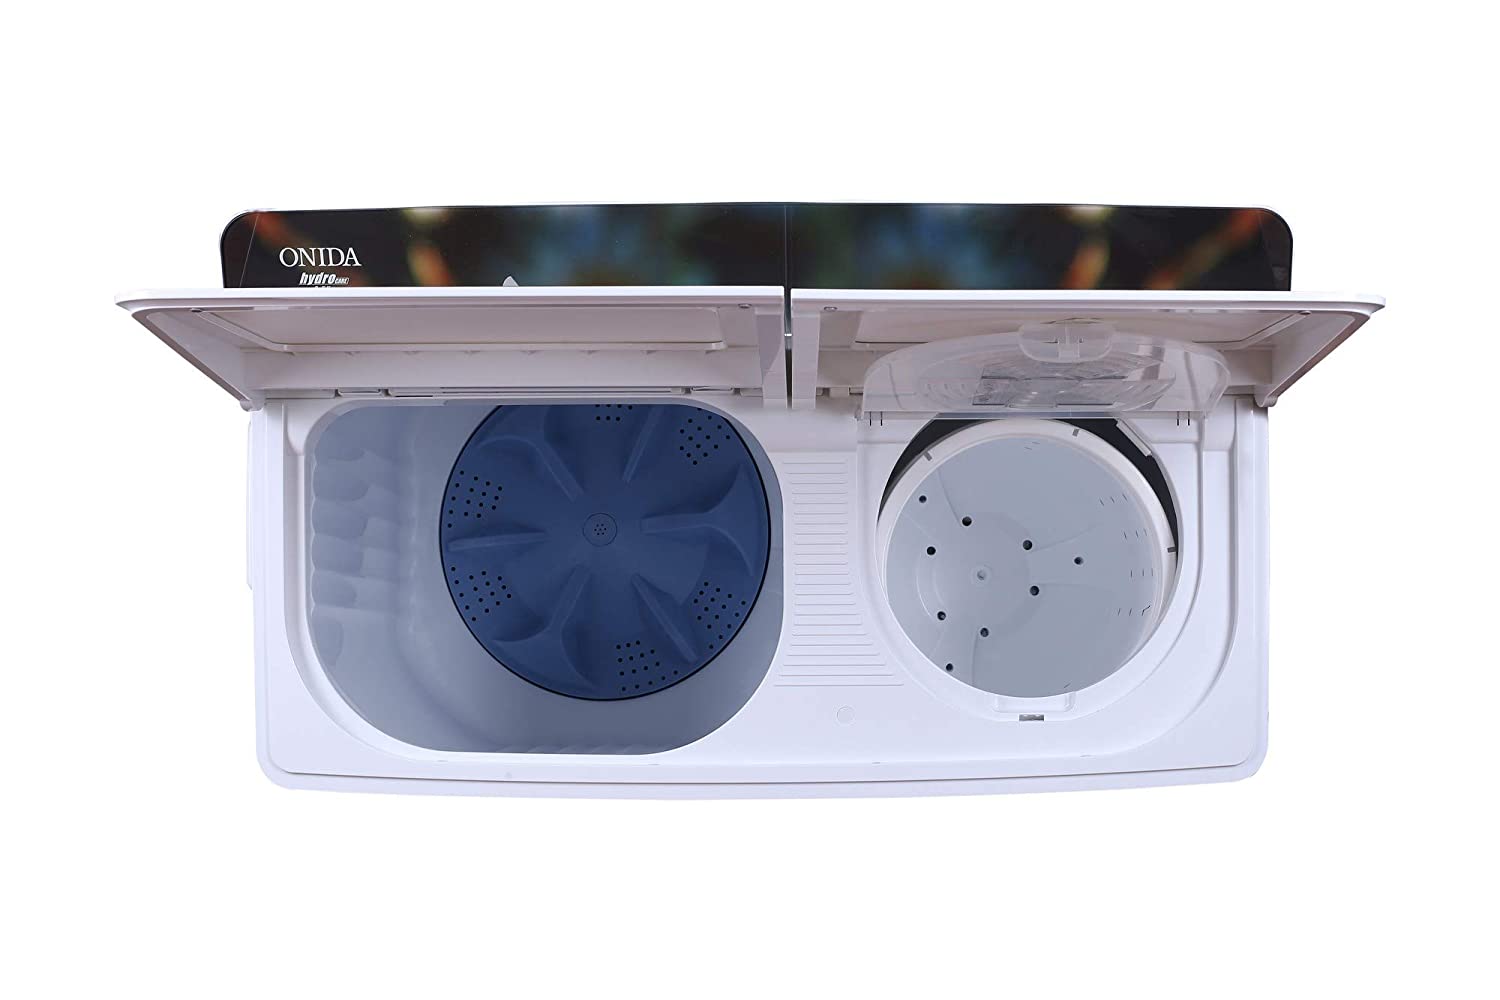 Onida 8.5 kg Semi-Automatic Top Loading Washing Machine (S85GC1, White)